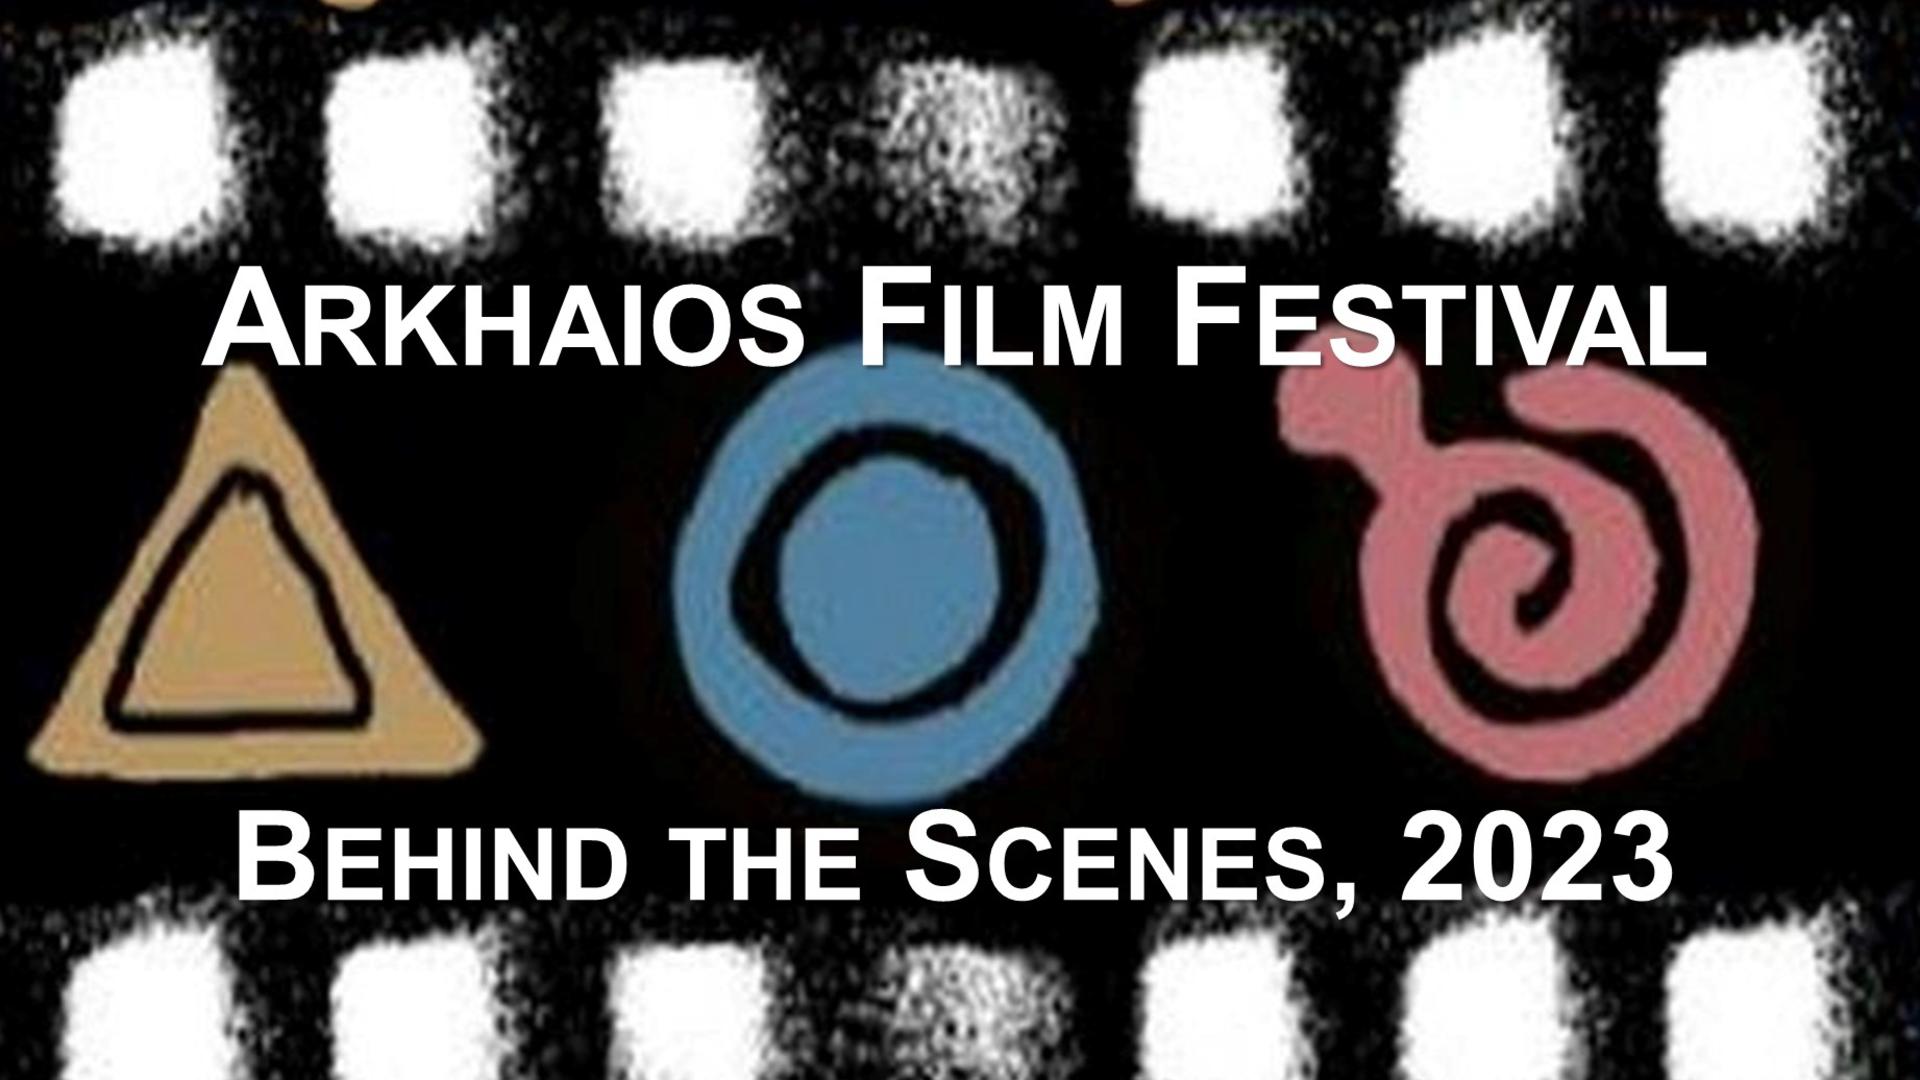 Arkhaios Film Festival: Behind the Scenes, 2023